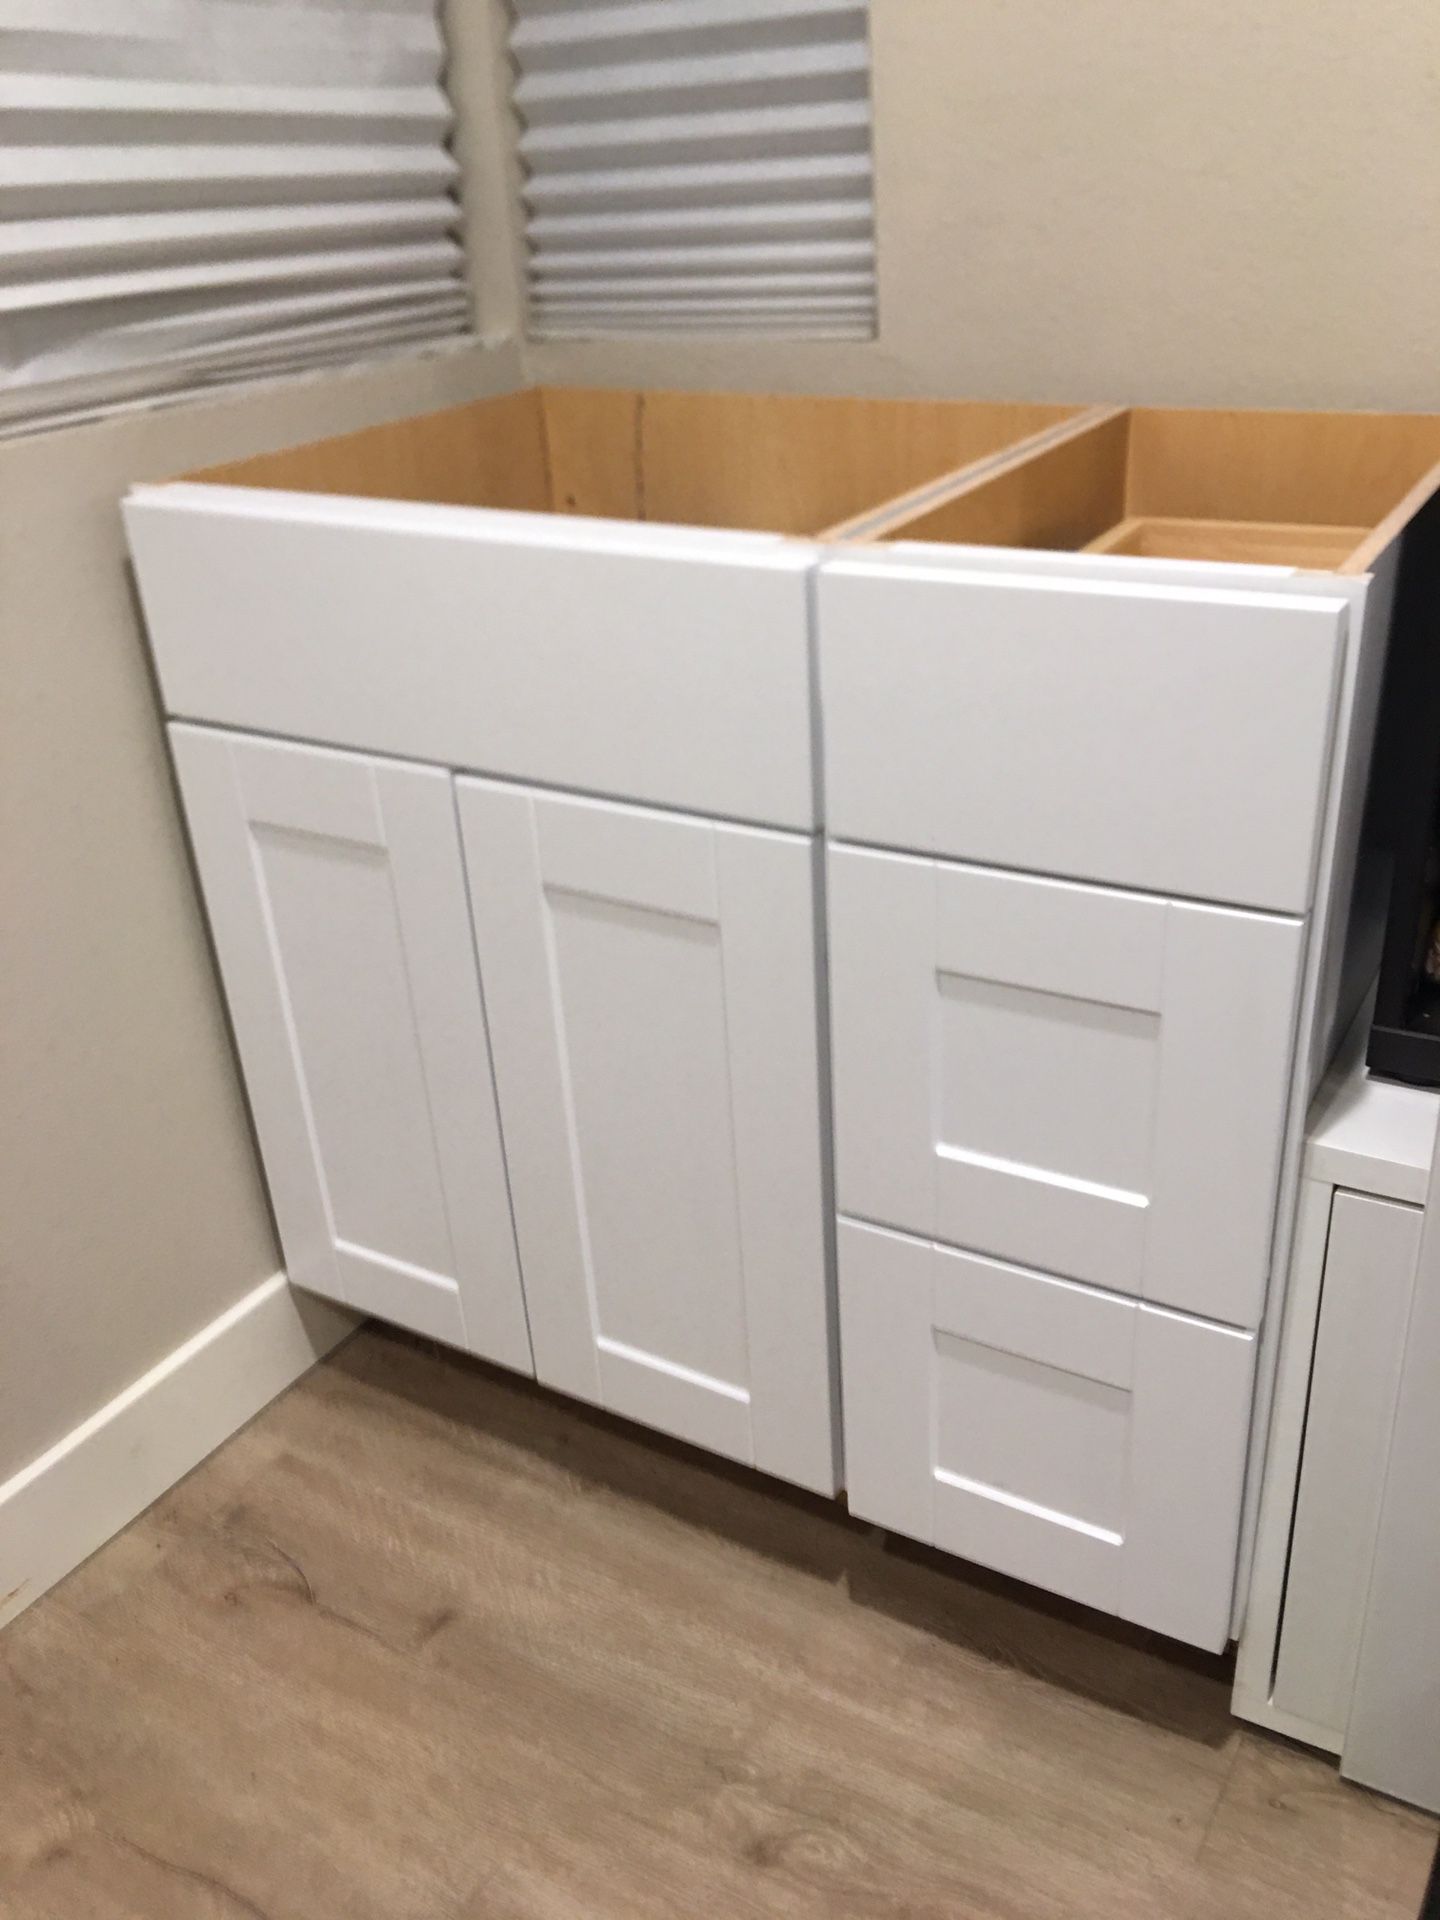 Vanity Drawer Base Cabinet w/ Drawers White kitchen bath laundry $458